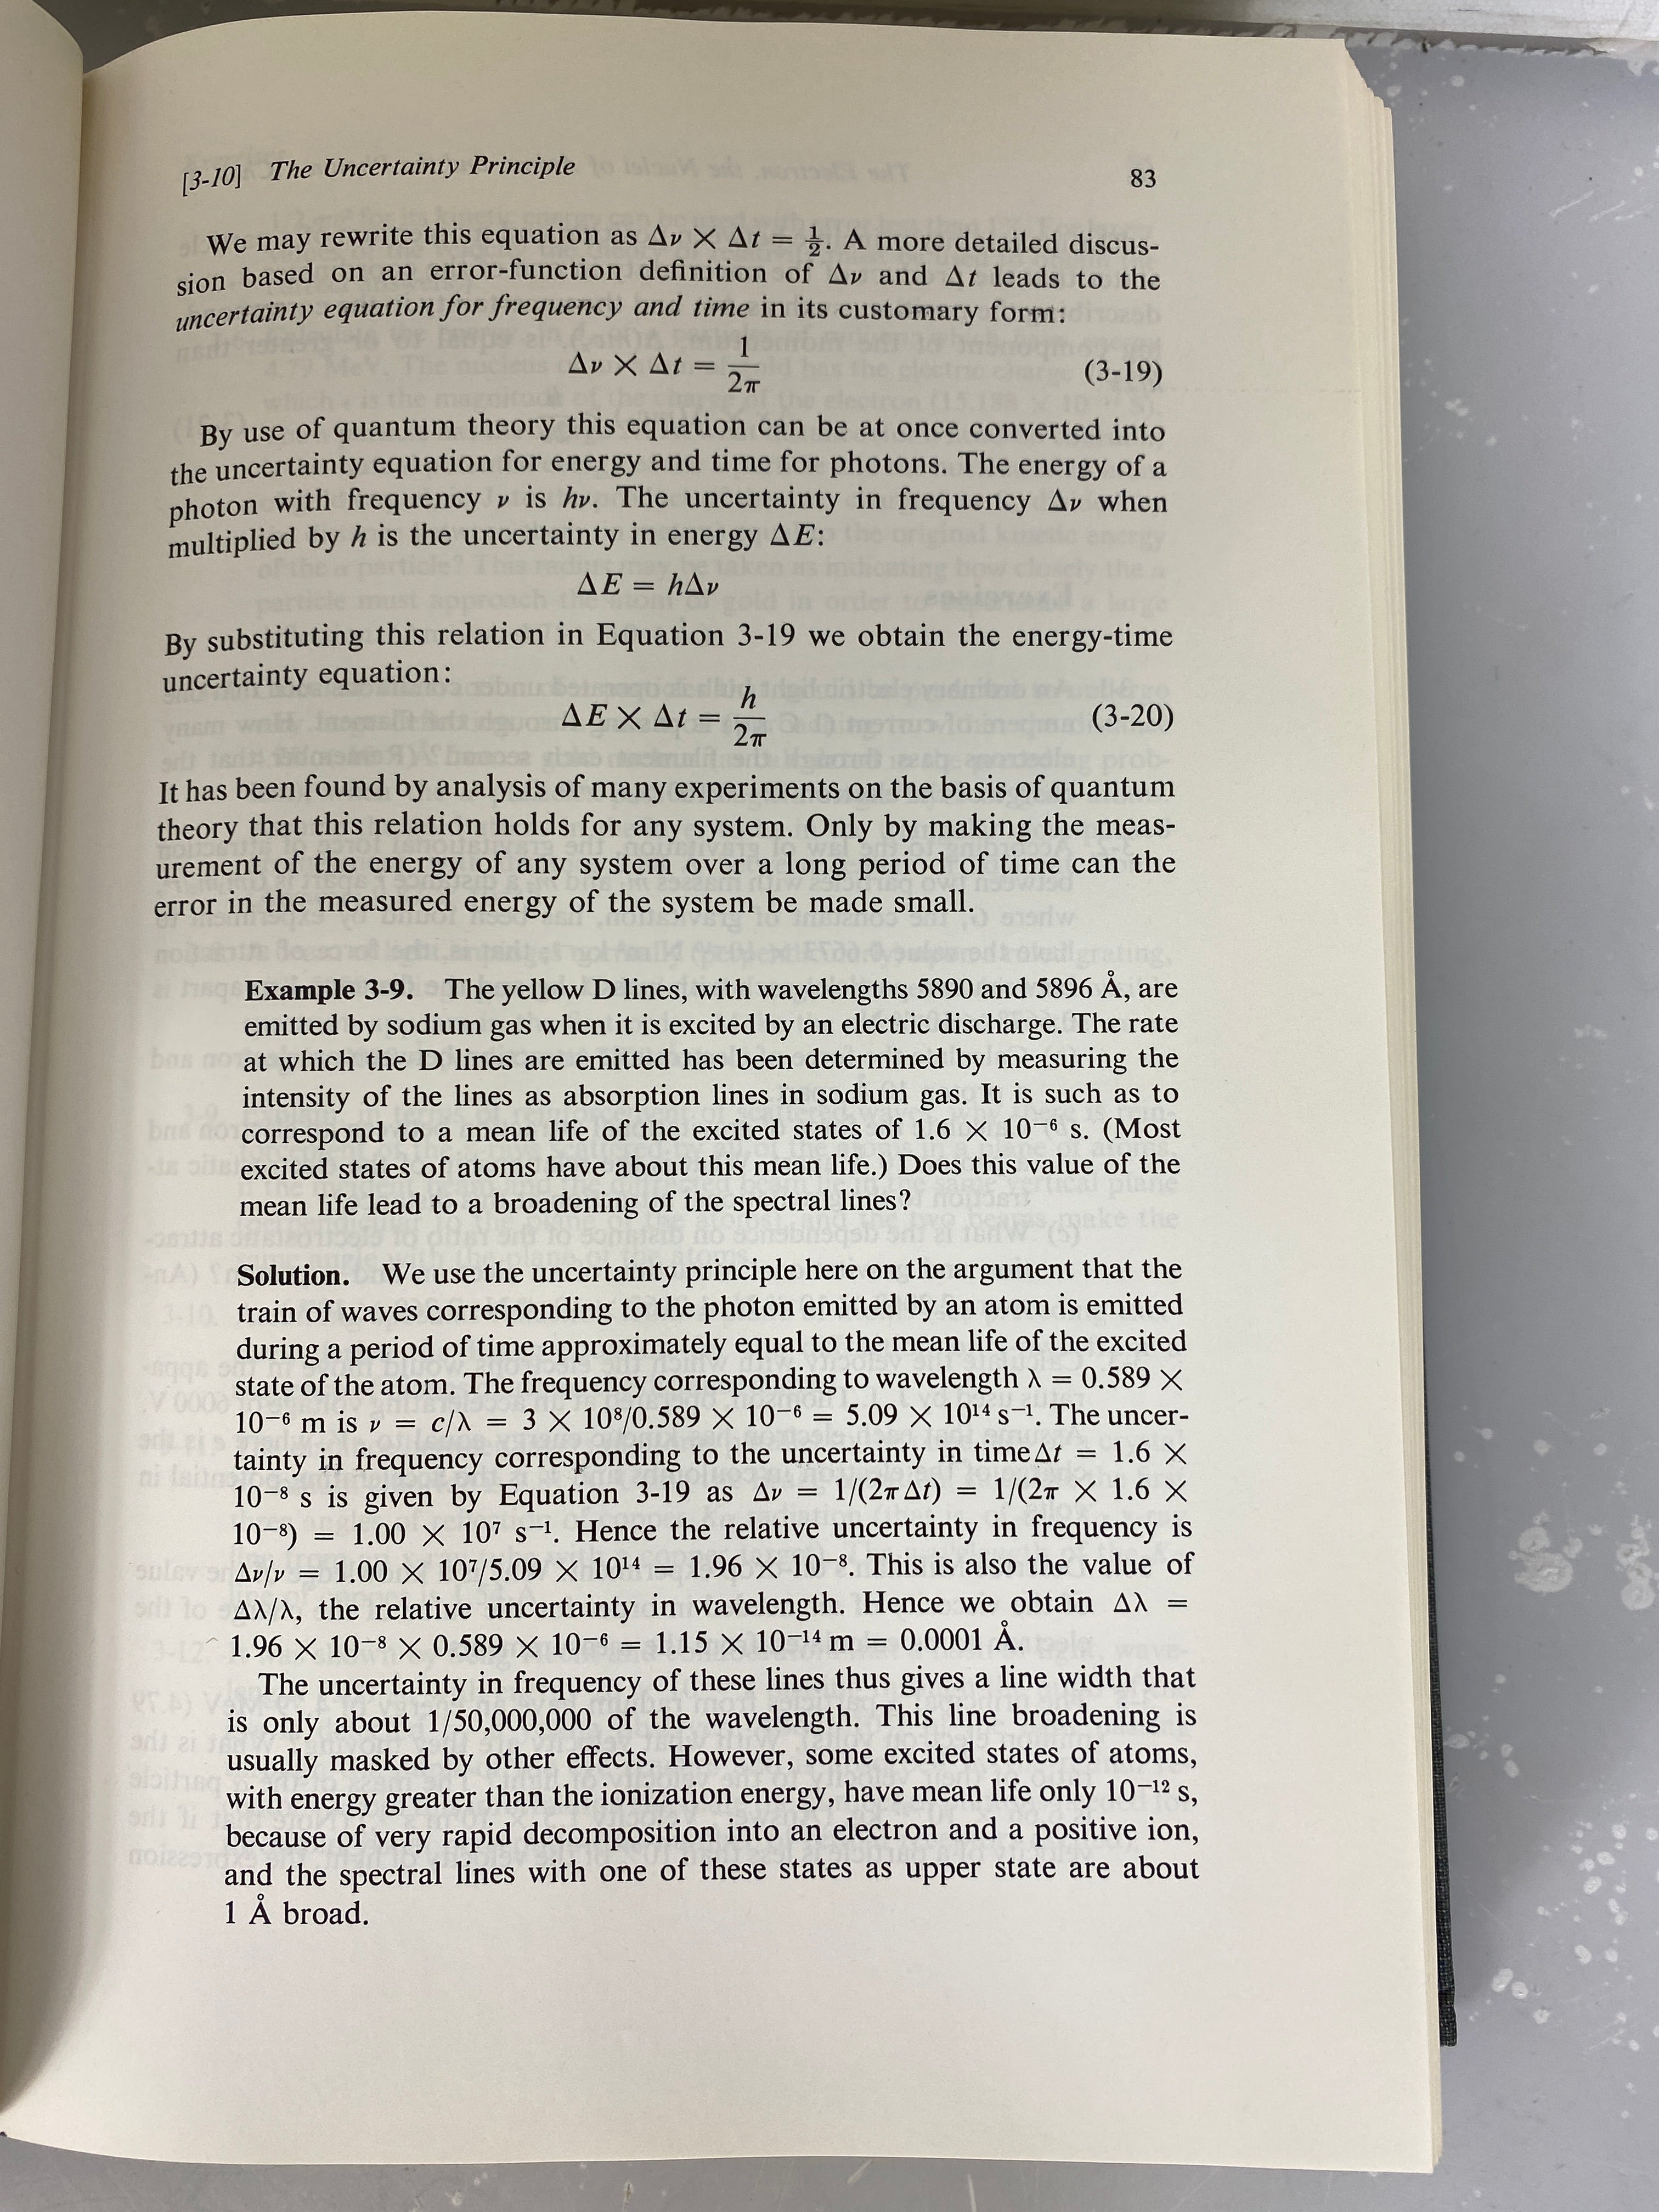 General Chemistry Third Edition Linus Pauling 1970 HC